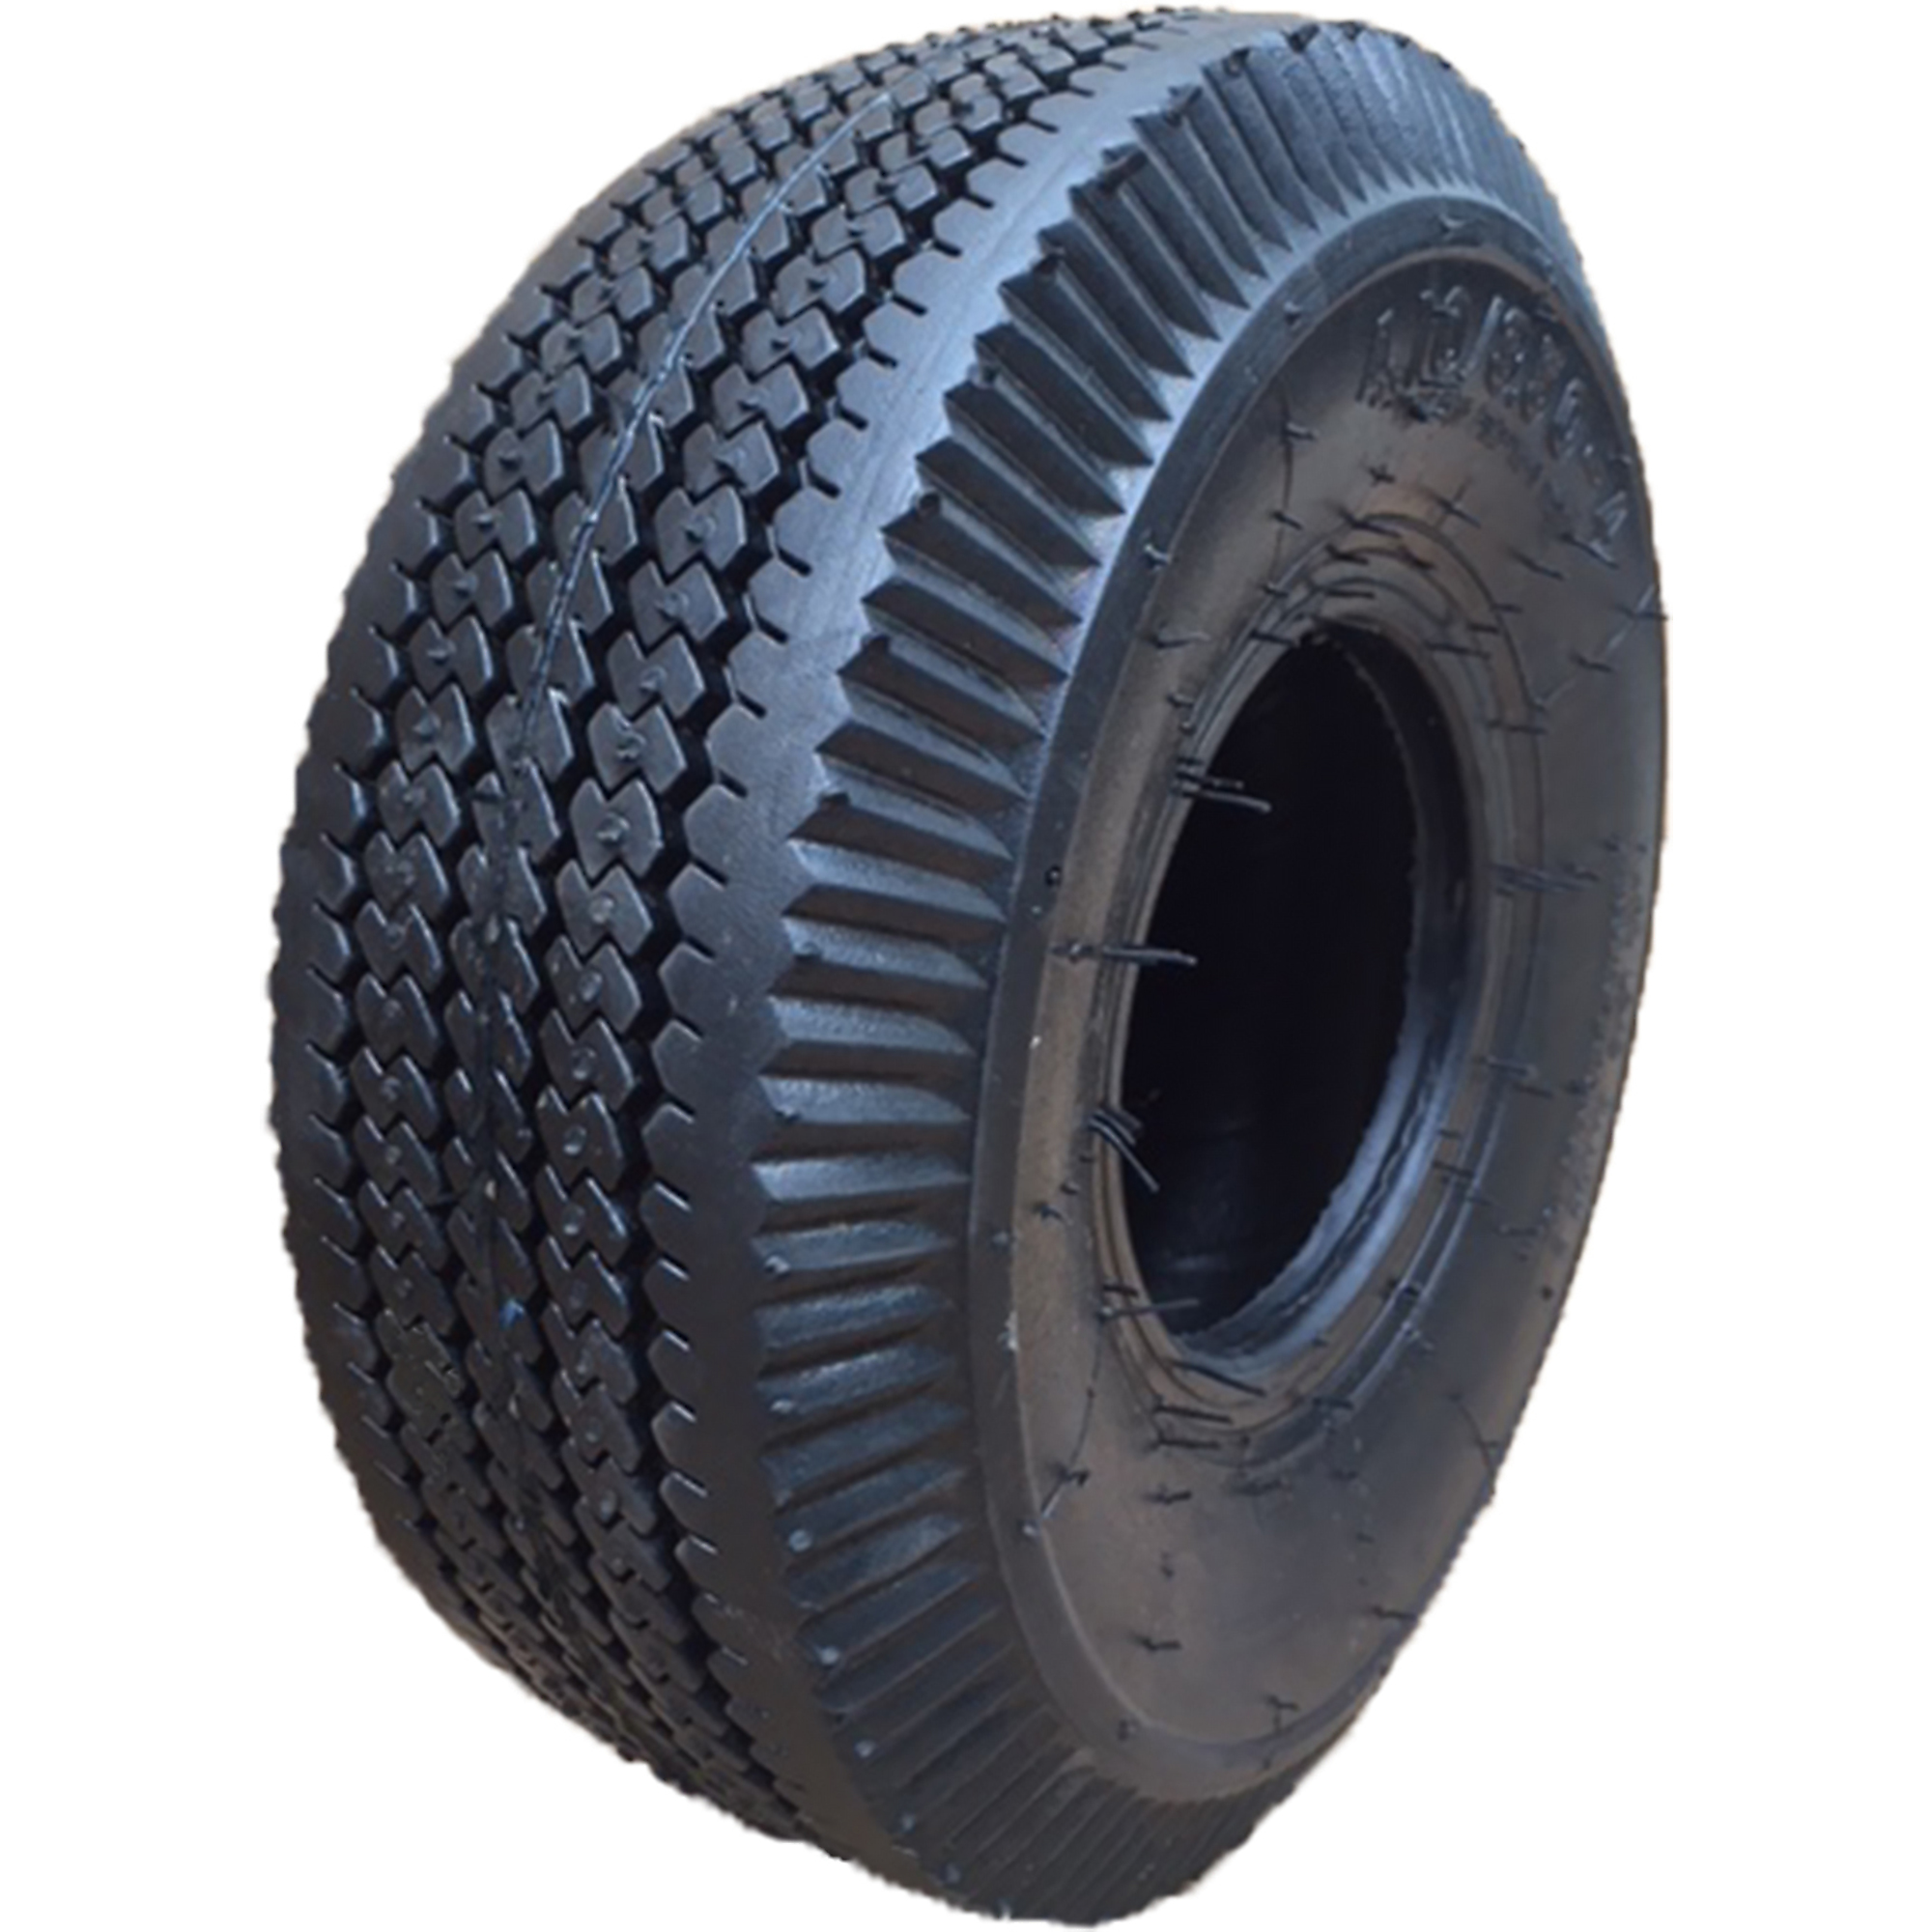 HI-RUN, Wheel Barrow Tire, Sawtooth, Tire Size 4.10/3.50-5 Load Range Rating B, Model WD1089